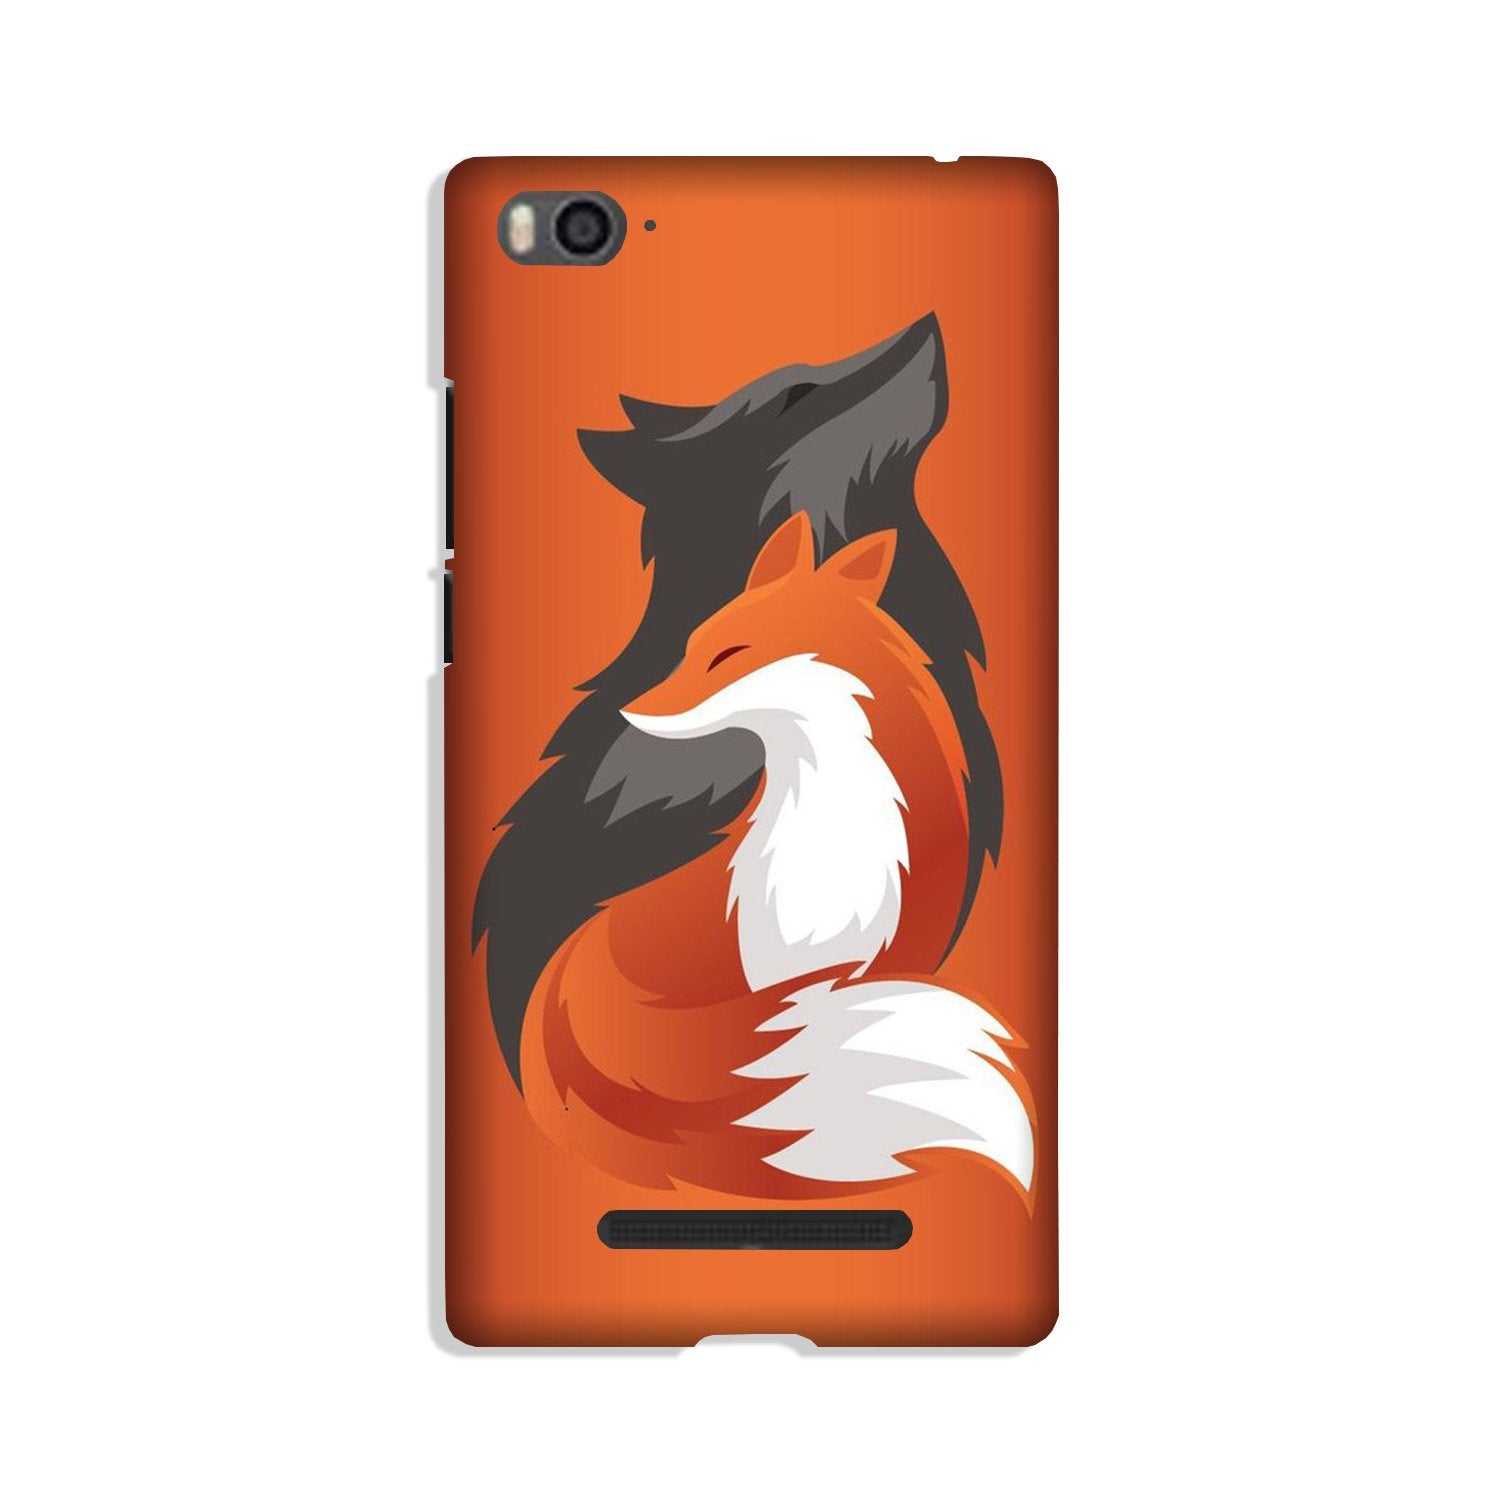 WolfCase for Xiaomi Mi 4i (Design No. 224)